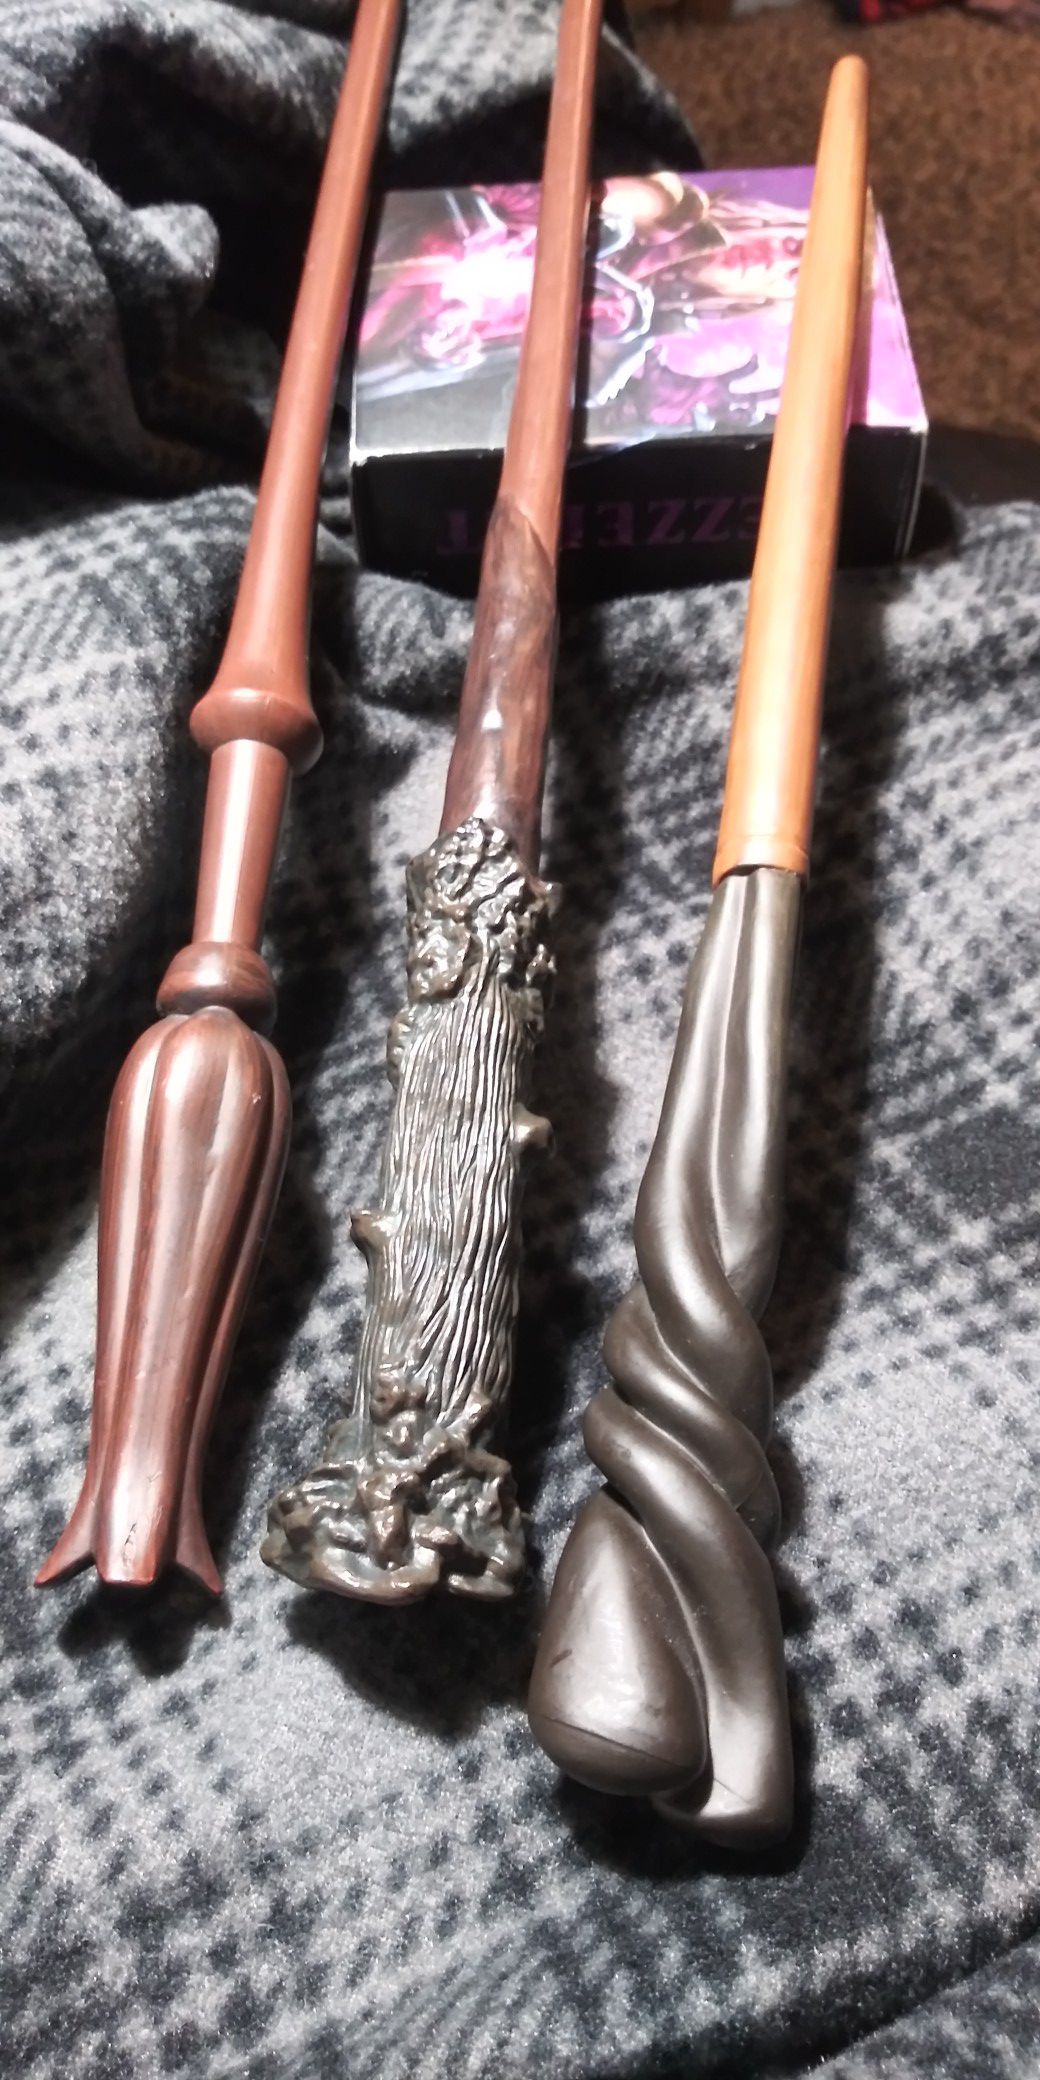 Harry Potter wands. :)